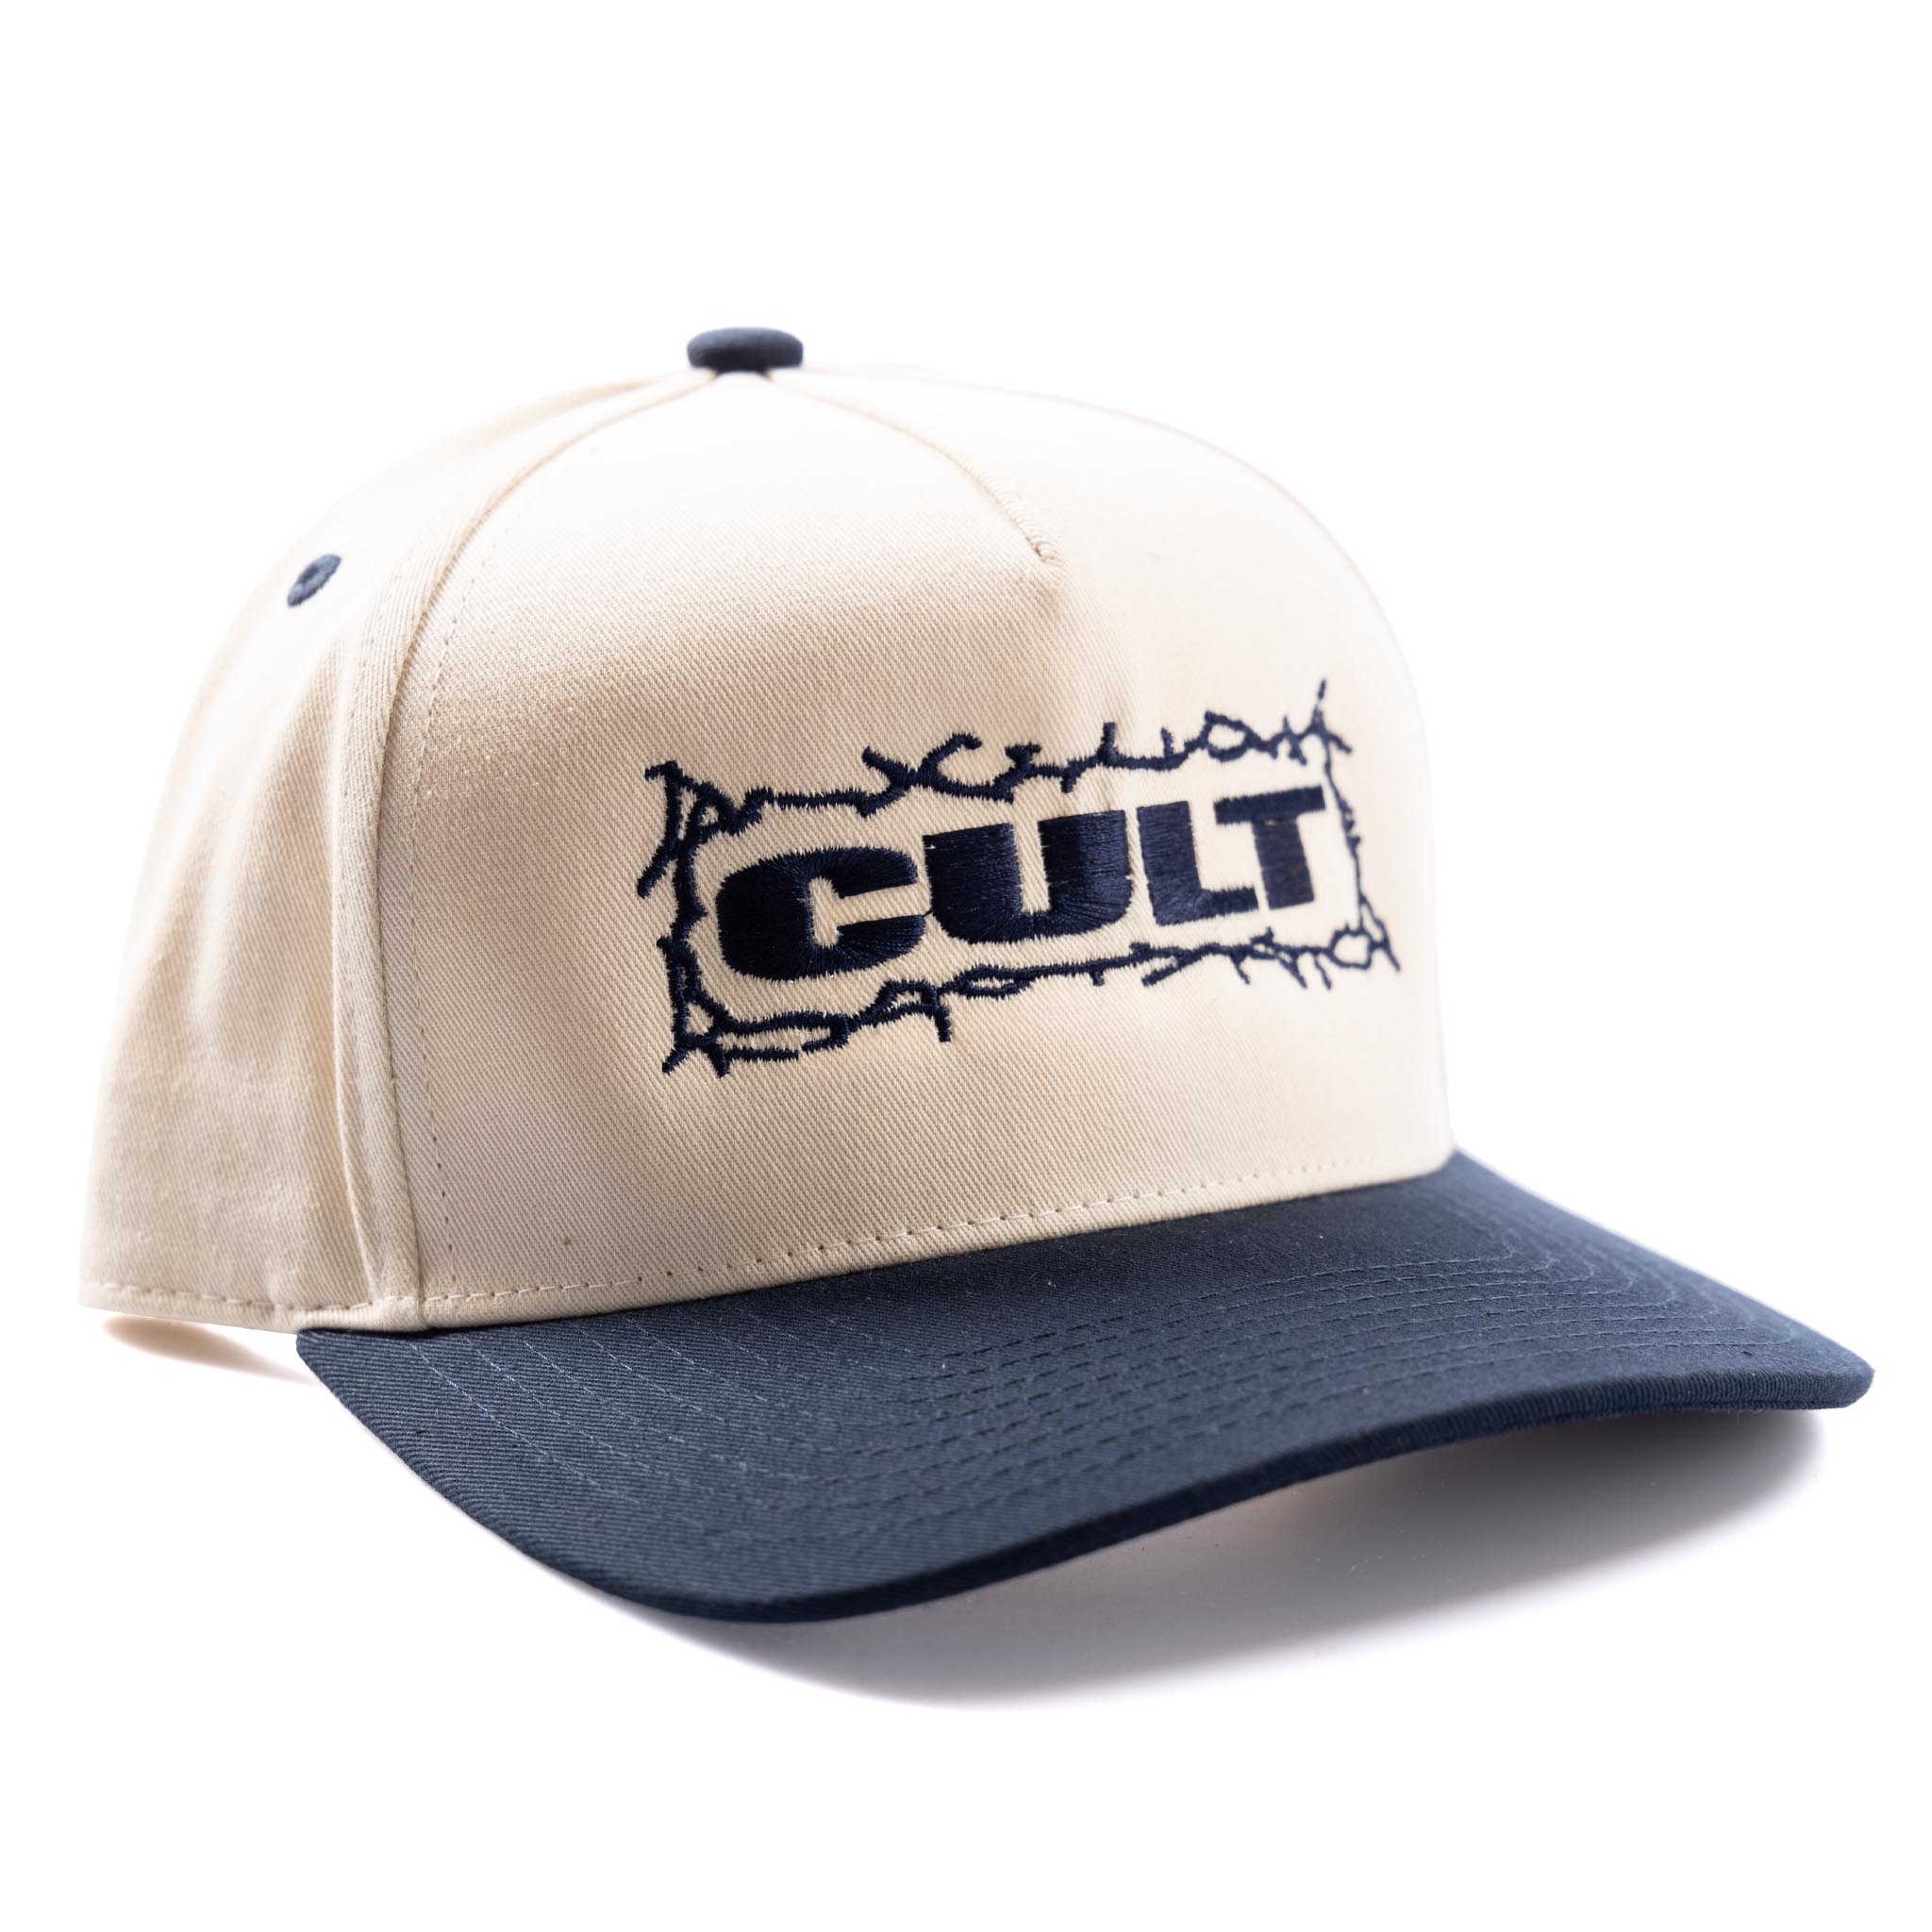 Cult Bolts Cap - Cream / Blue Angled | Backyard UK BMX Shop Hastings